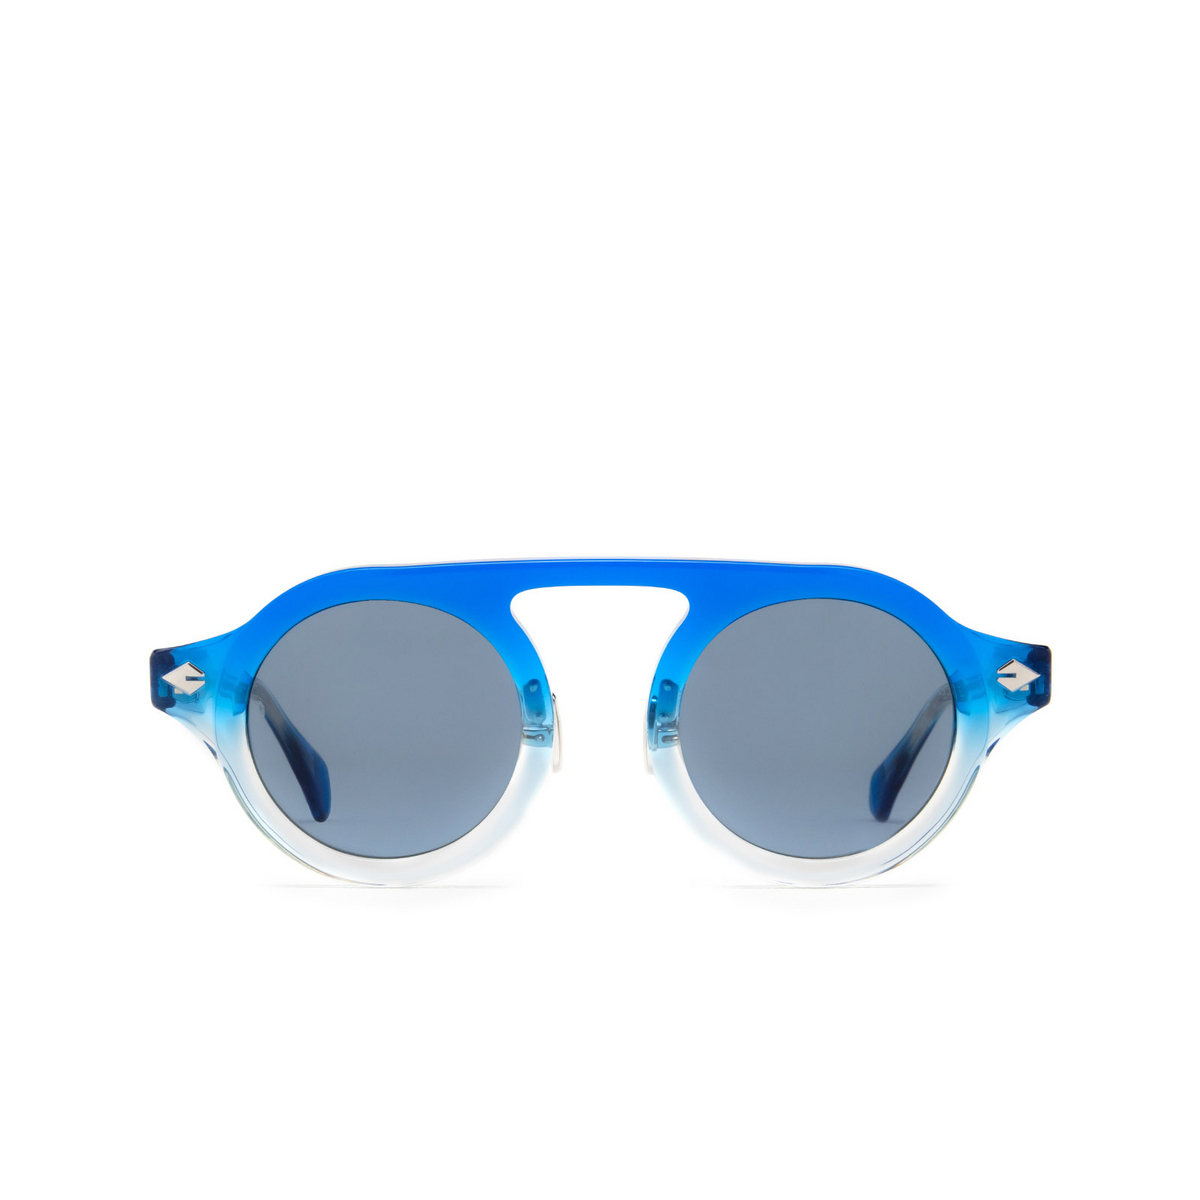 T Henri E2 Sunglasses SANTORINI - front view